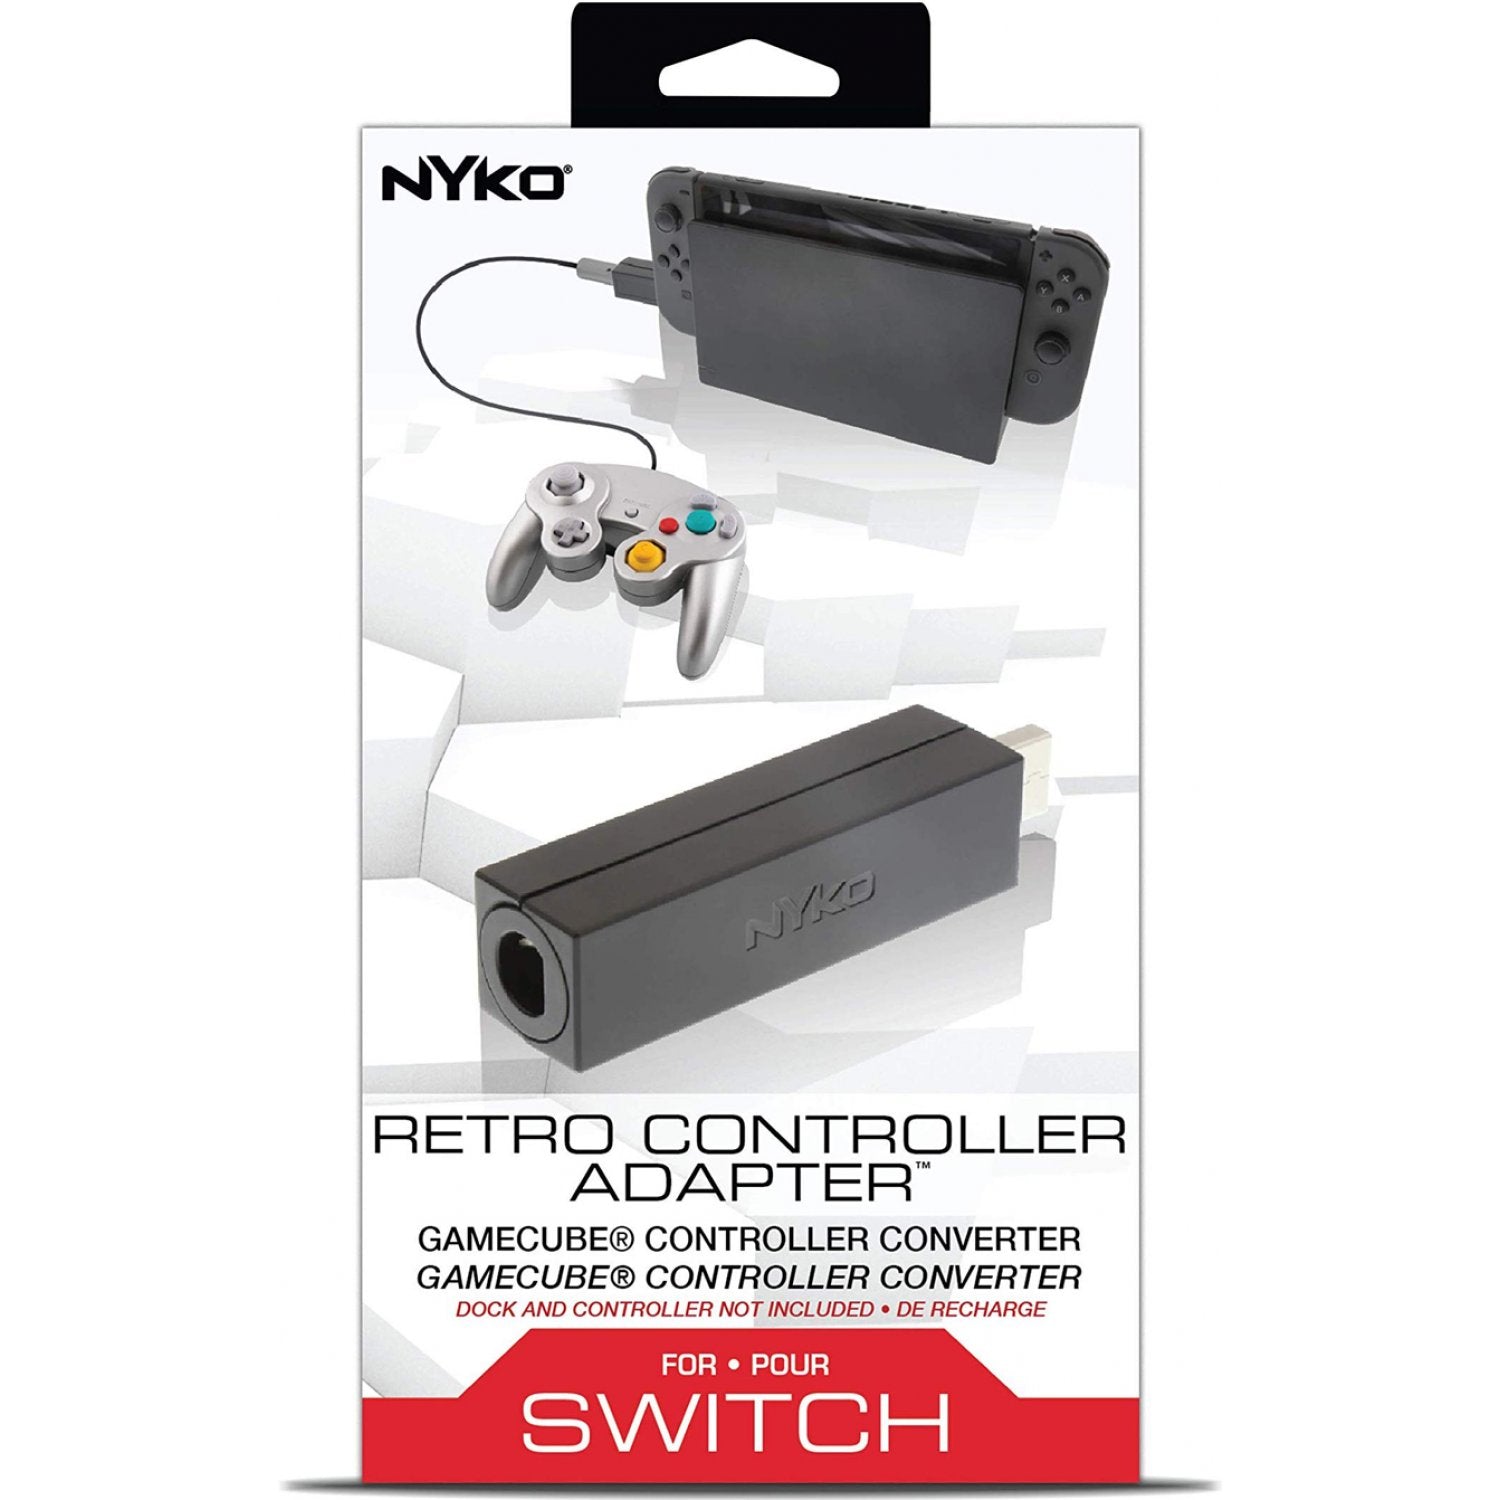 Nyko Retro Controller Adapter for Nintendo Switch